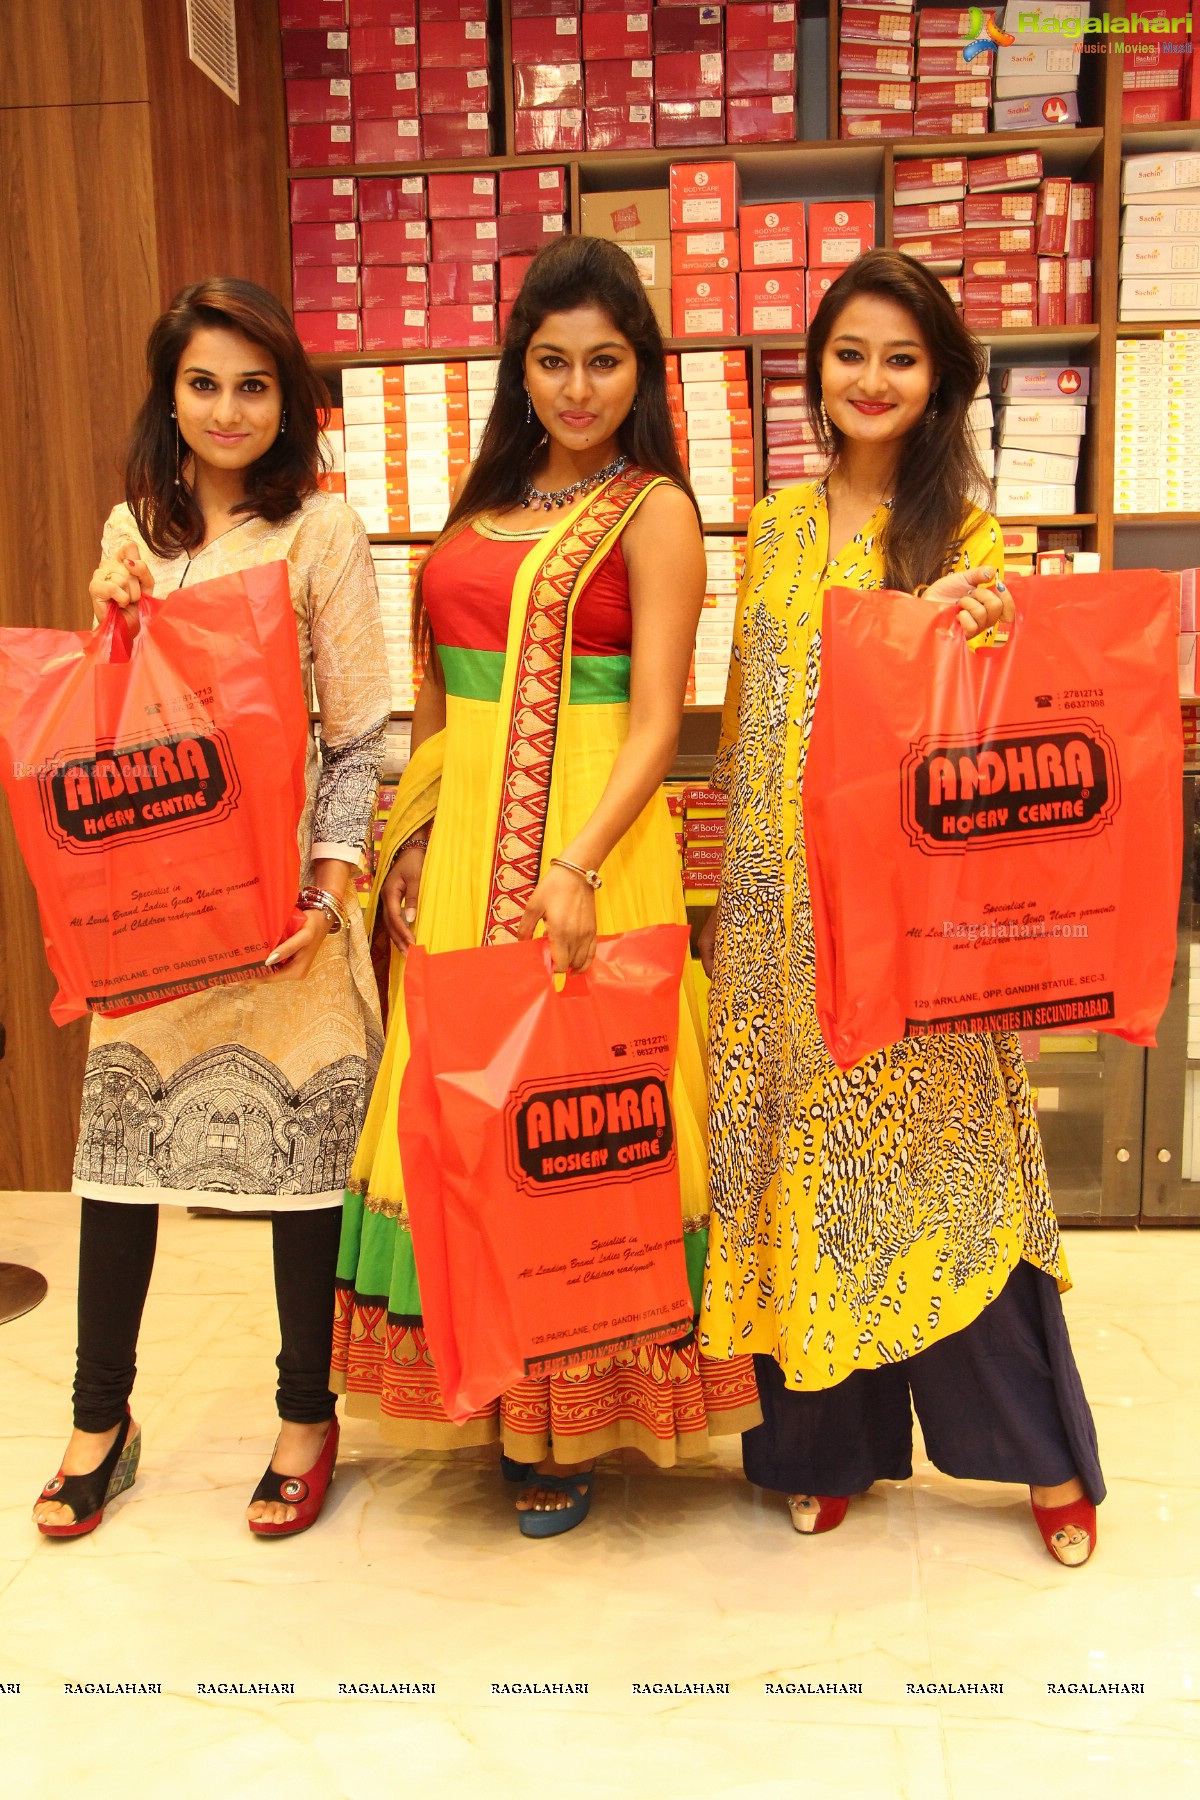 Andhra Hosiery Showroom Launch at Somajiguda, Hyderabad